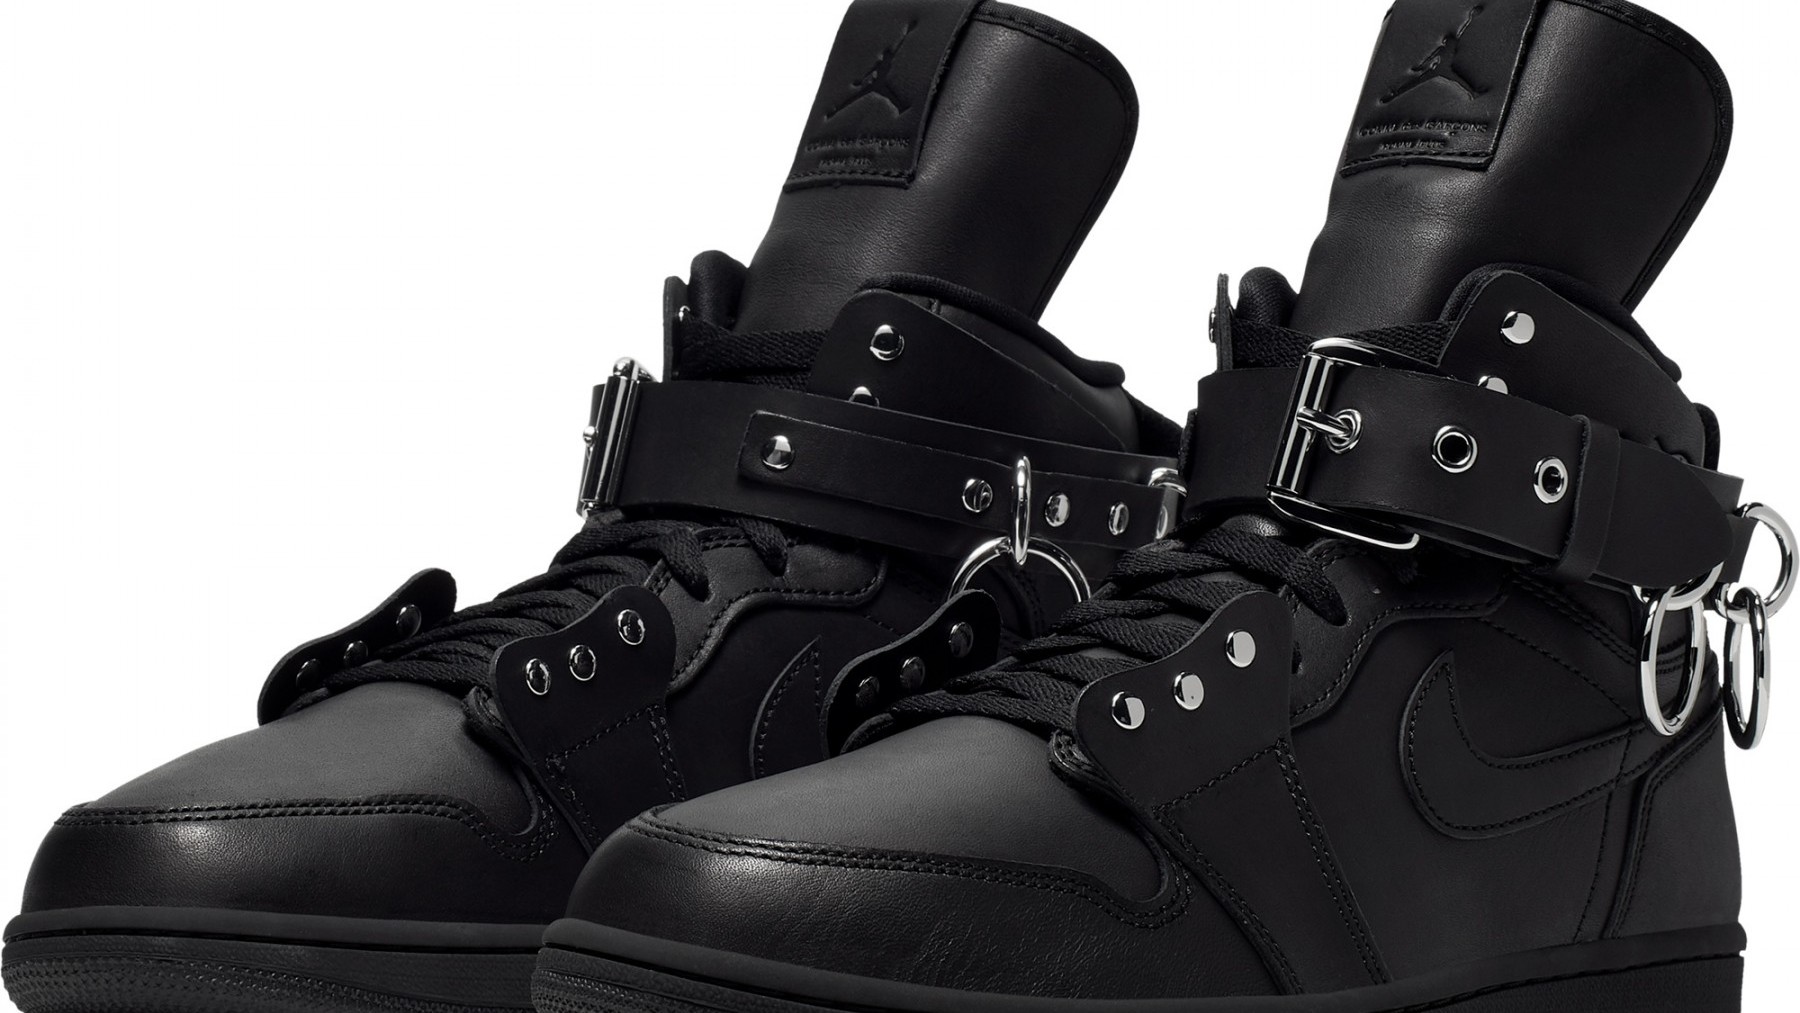 Comme des Garcons HOMME Plus Air Jordan 1 High Black White Release Date |  Sole Collector